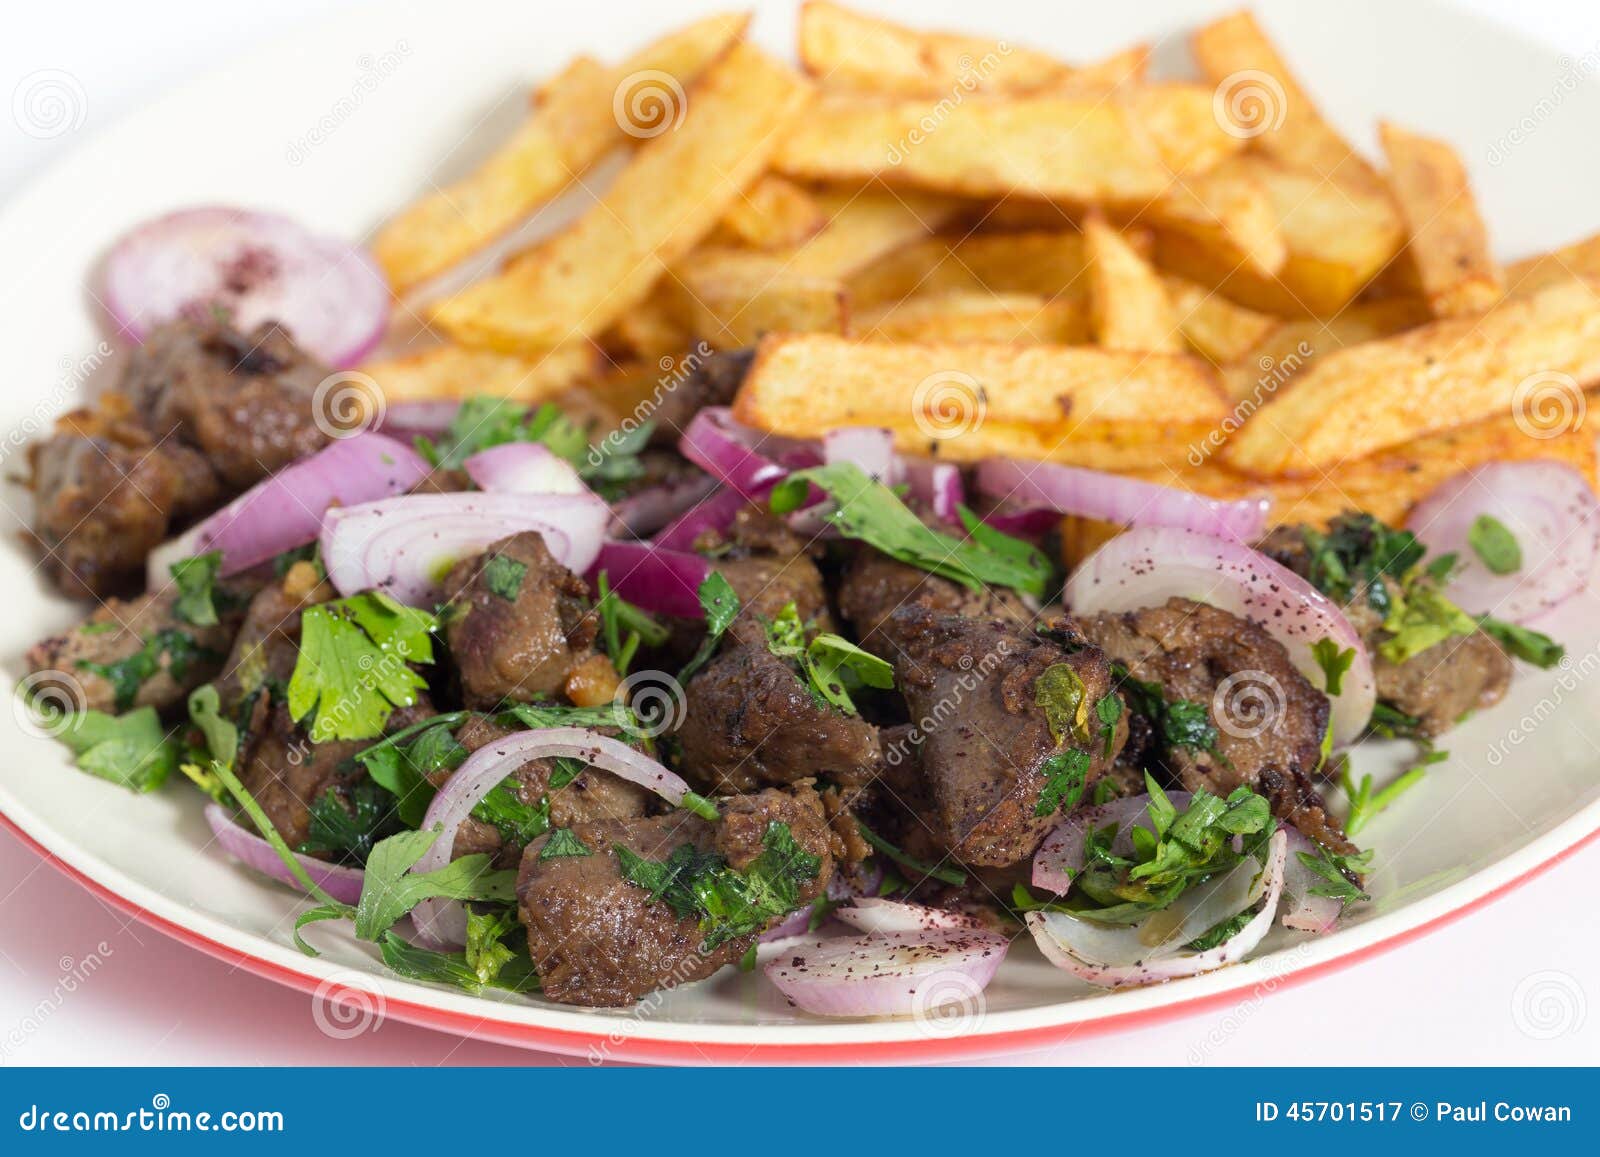 albanian liver with fries closeup